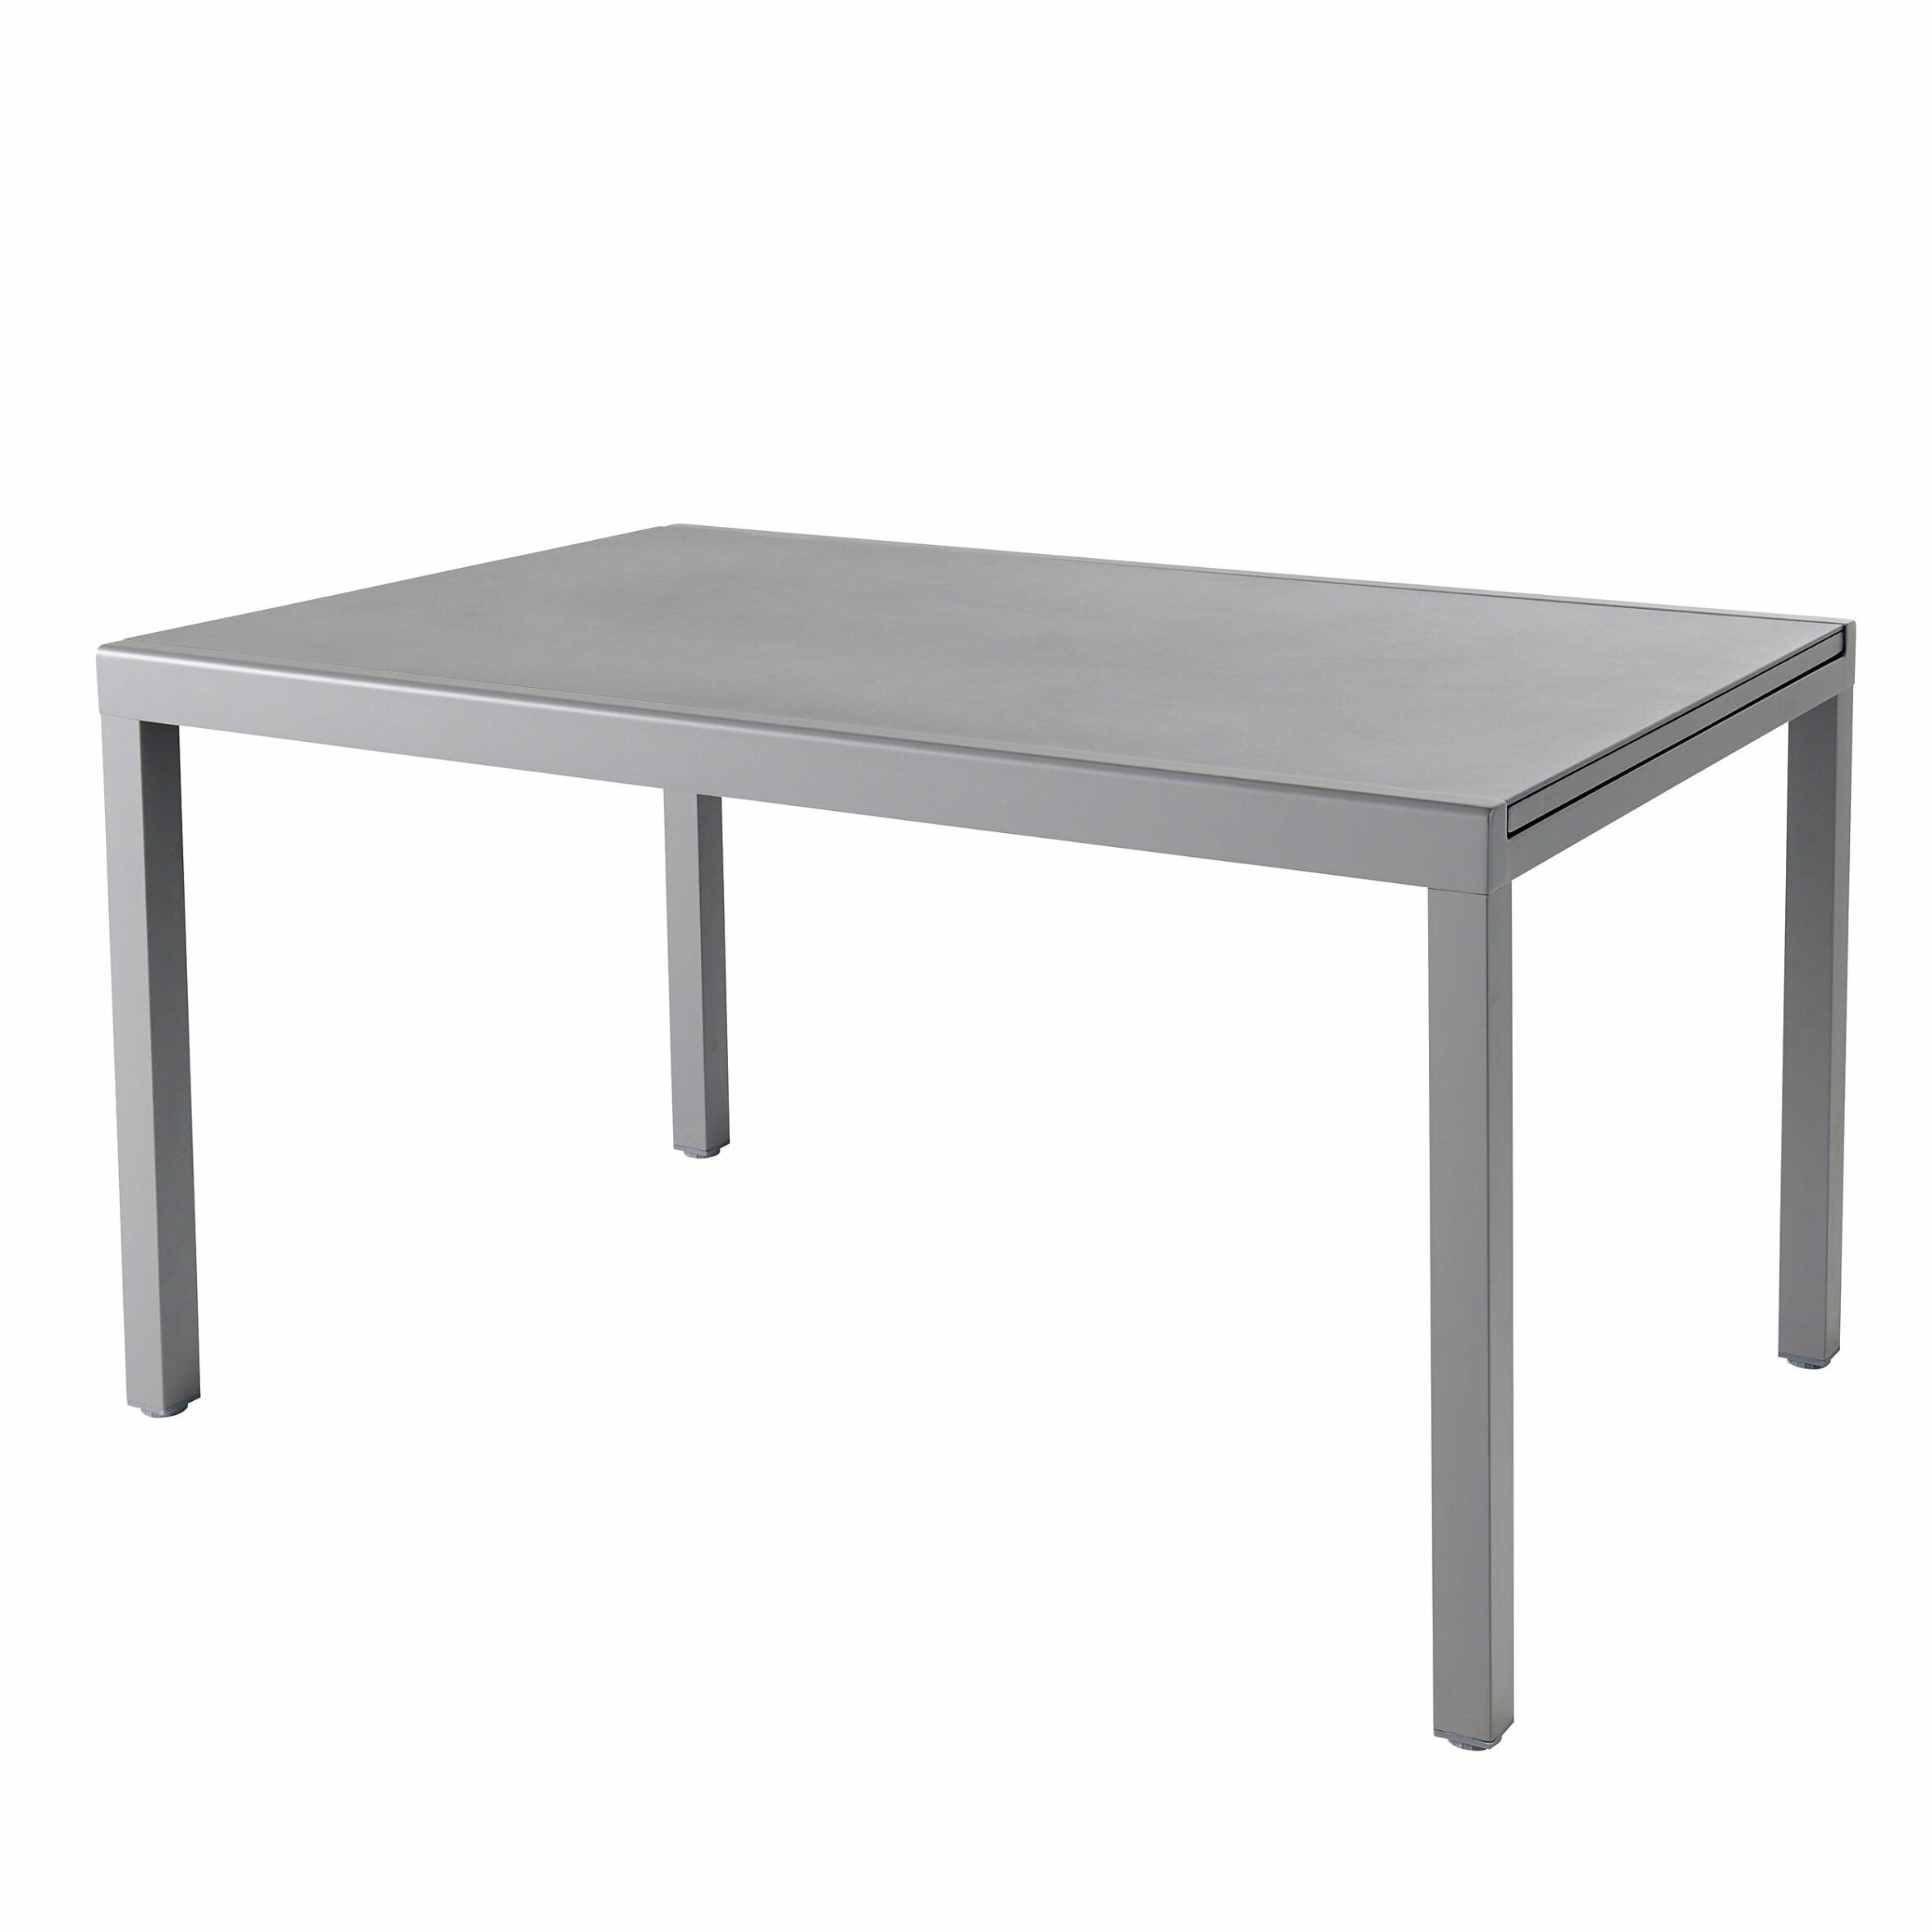 GoodHome Moorea Metal 8 seater Extendable Table - Garden Furniture set 5491